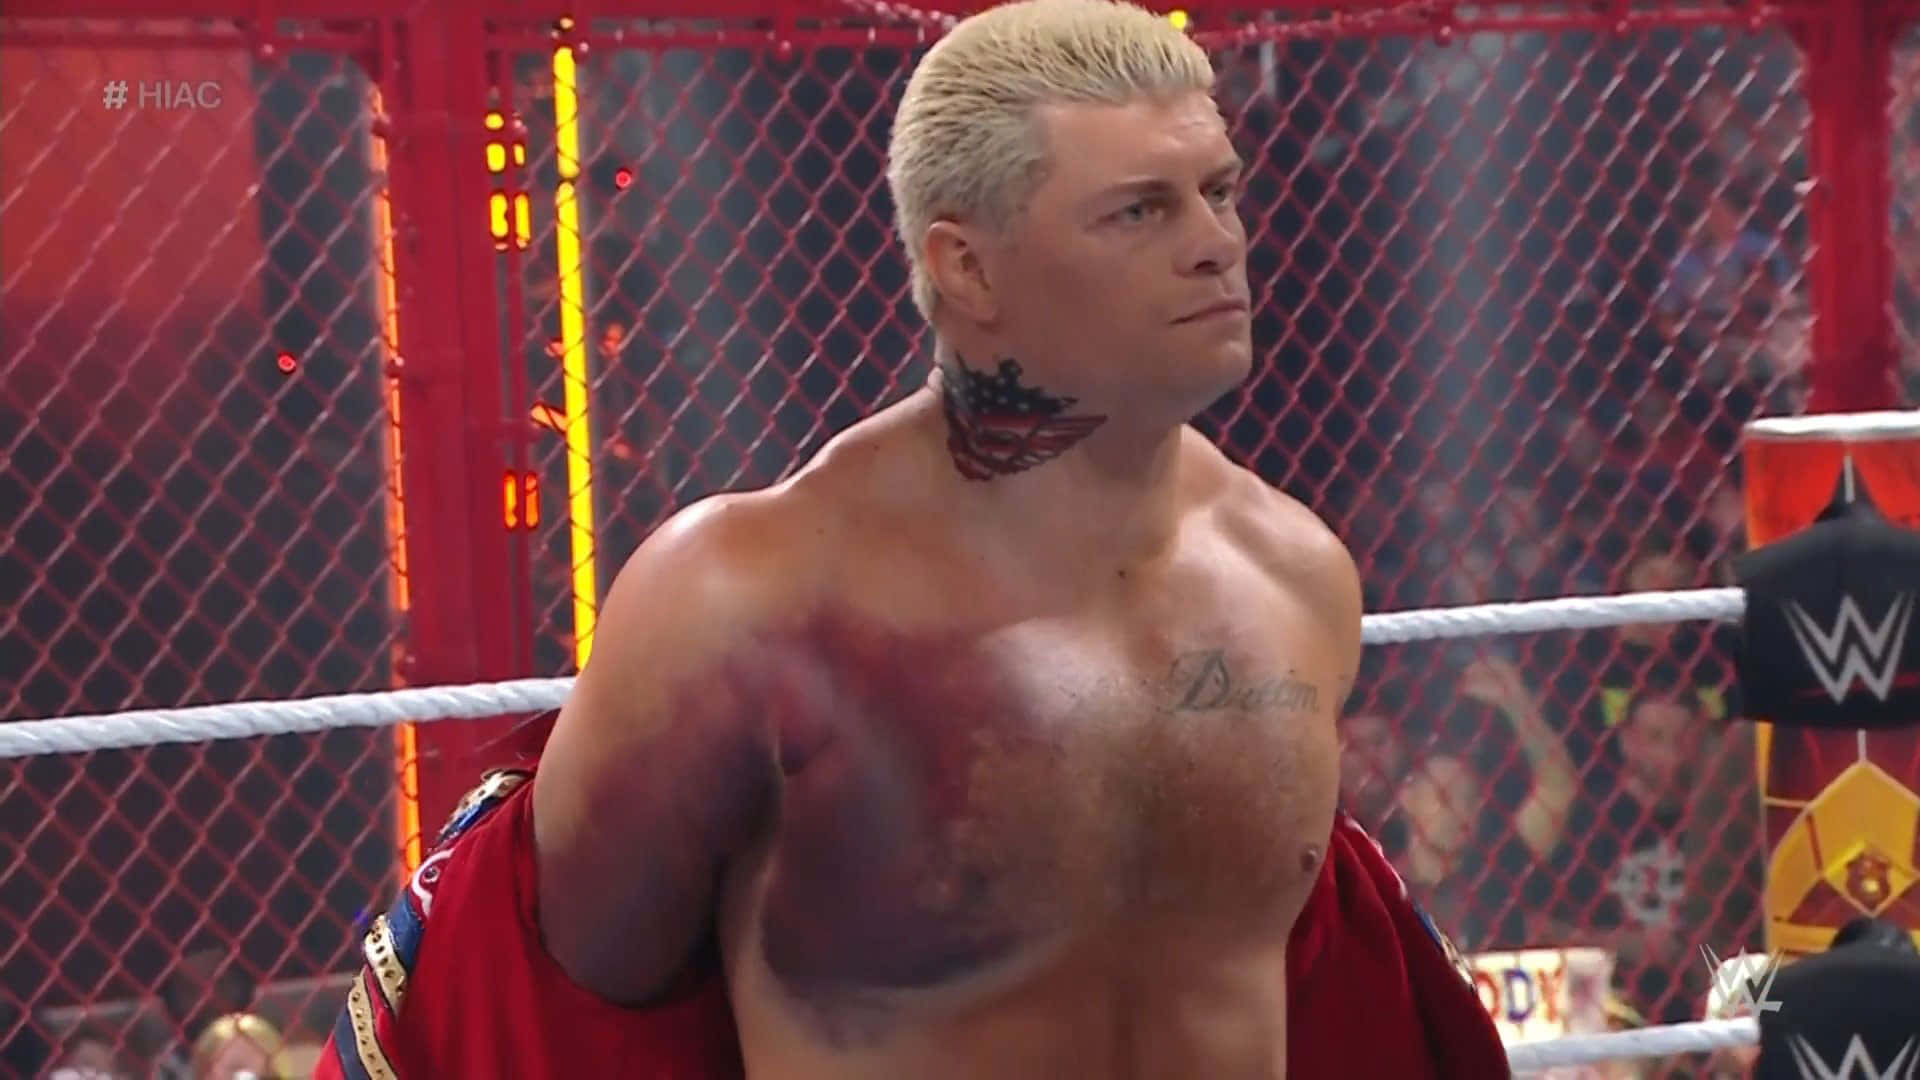 Wwe Wrestler Cody Rhodes Topless Wallpaper